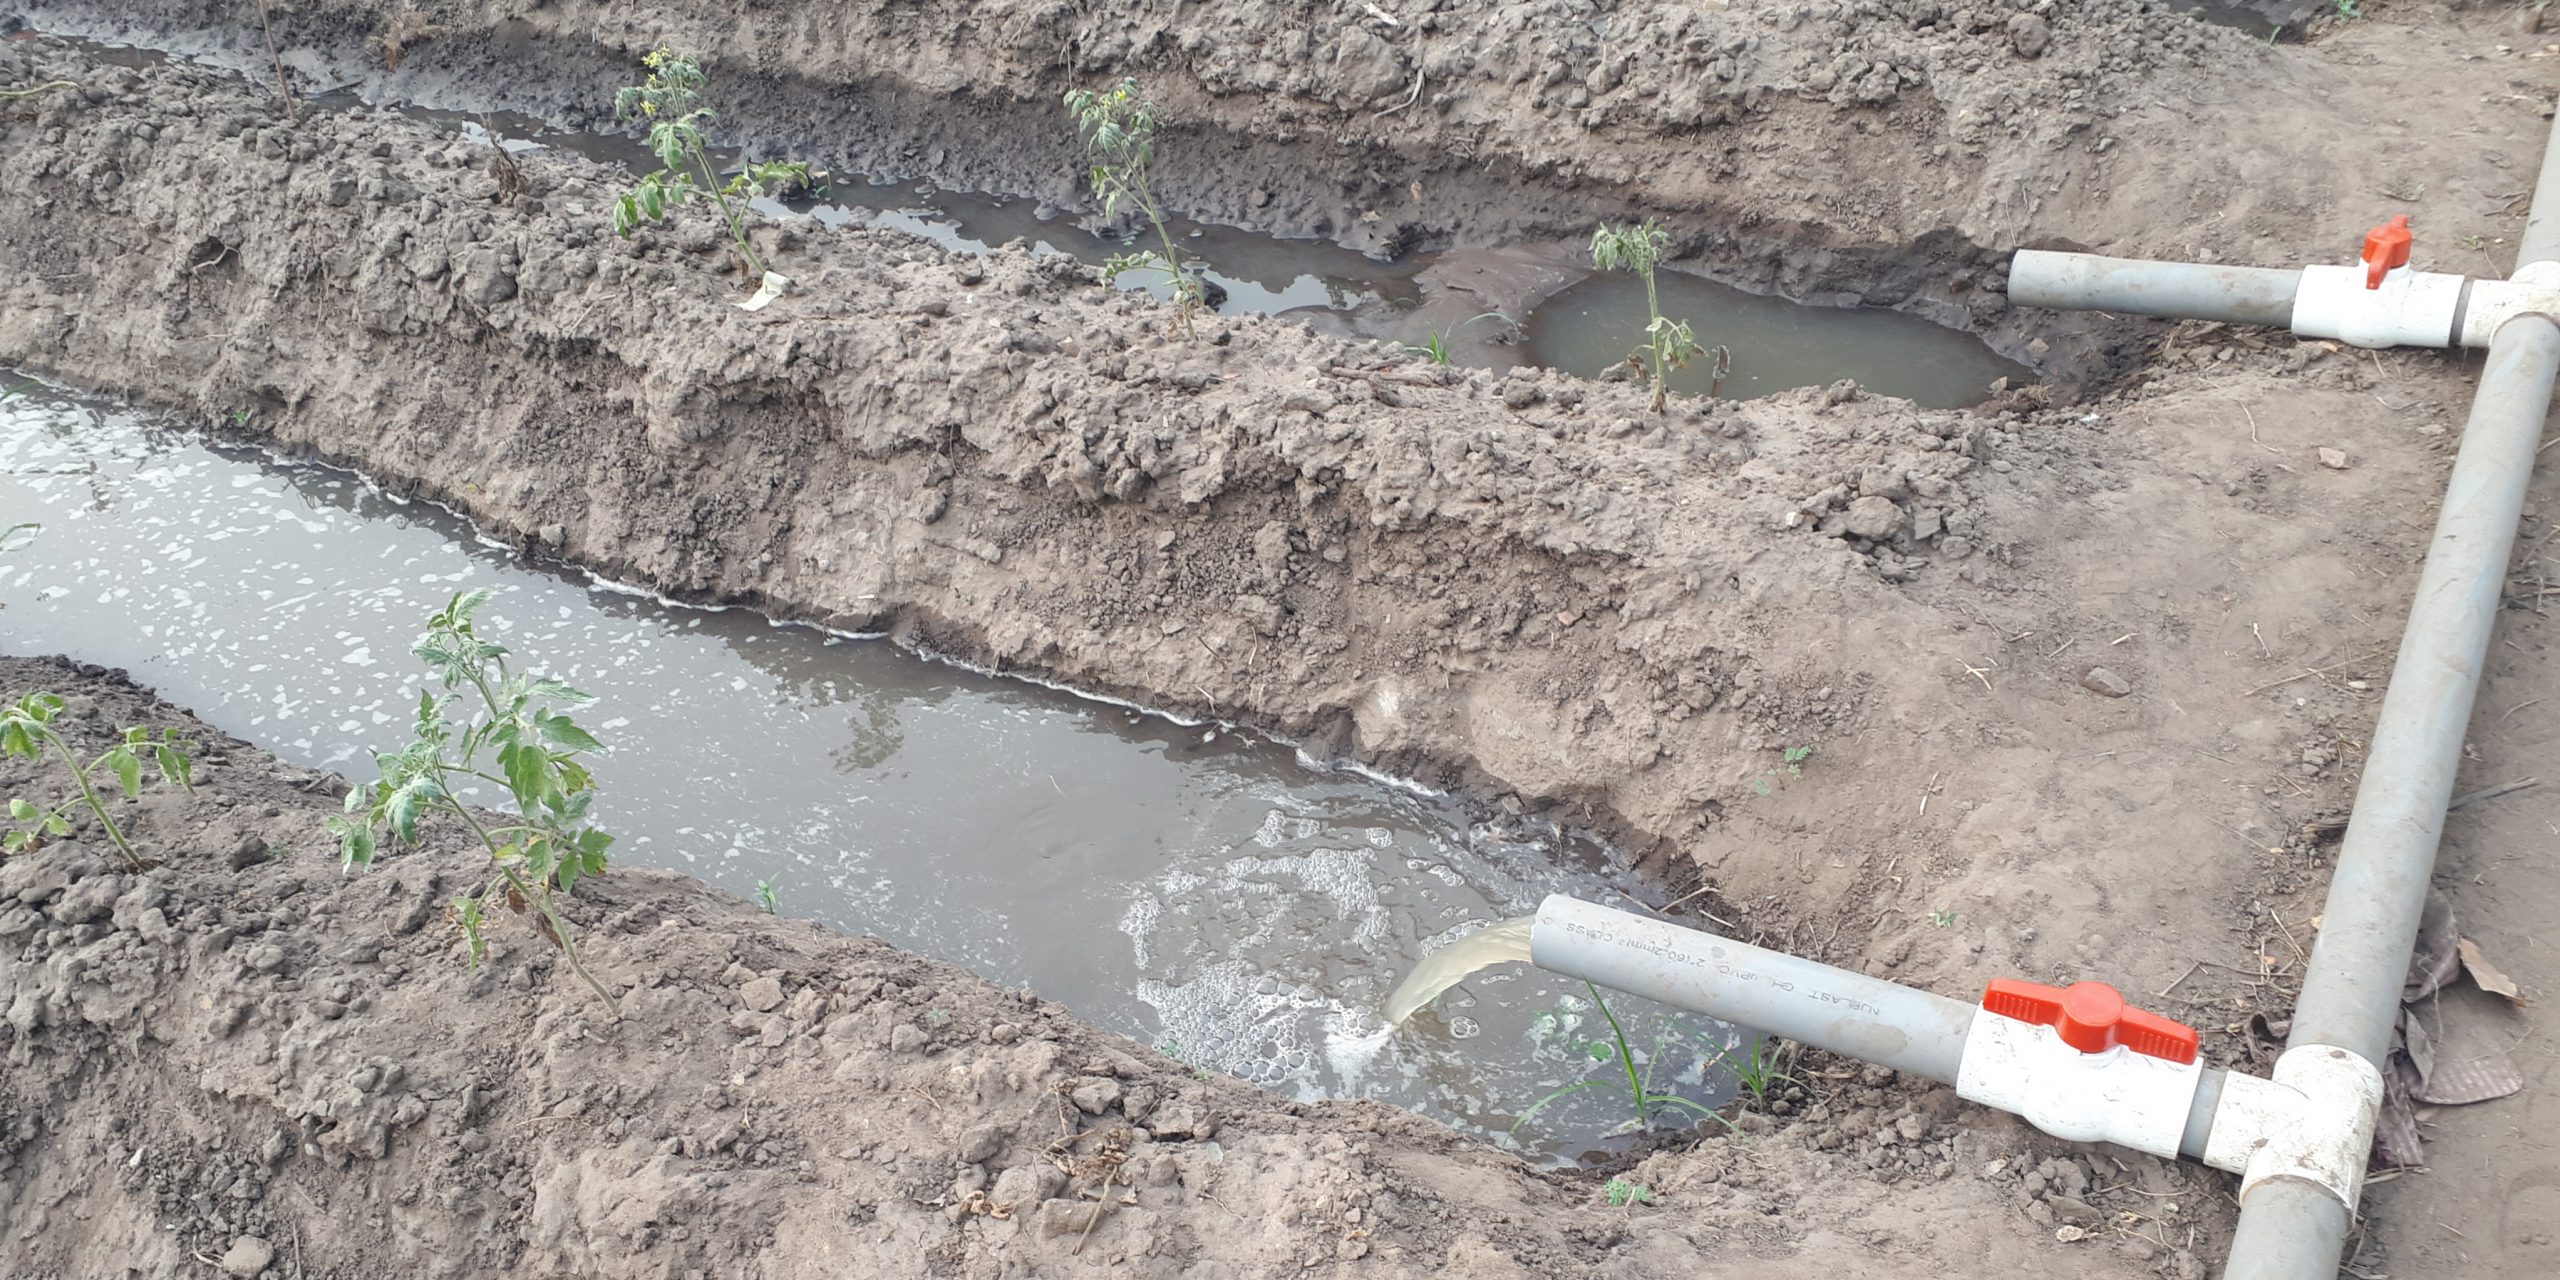 Irrigating tomatoes in Ghana